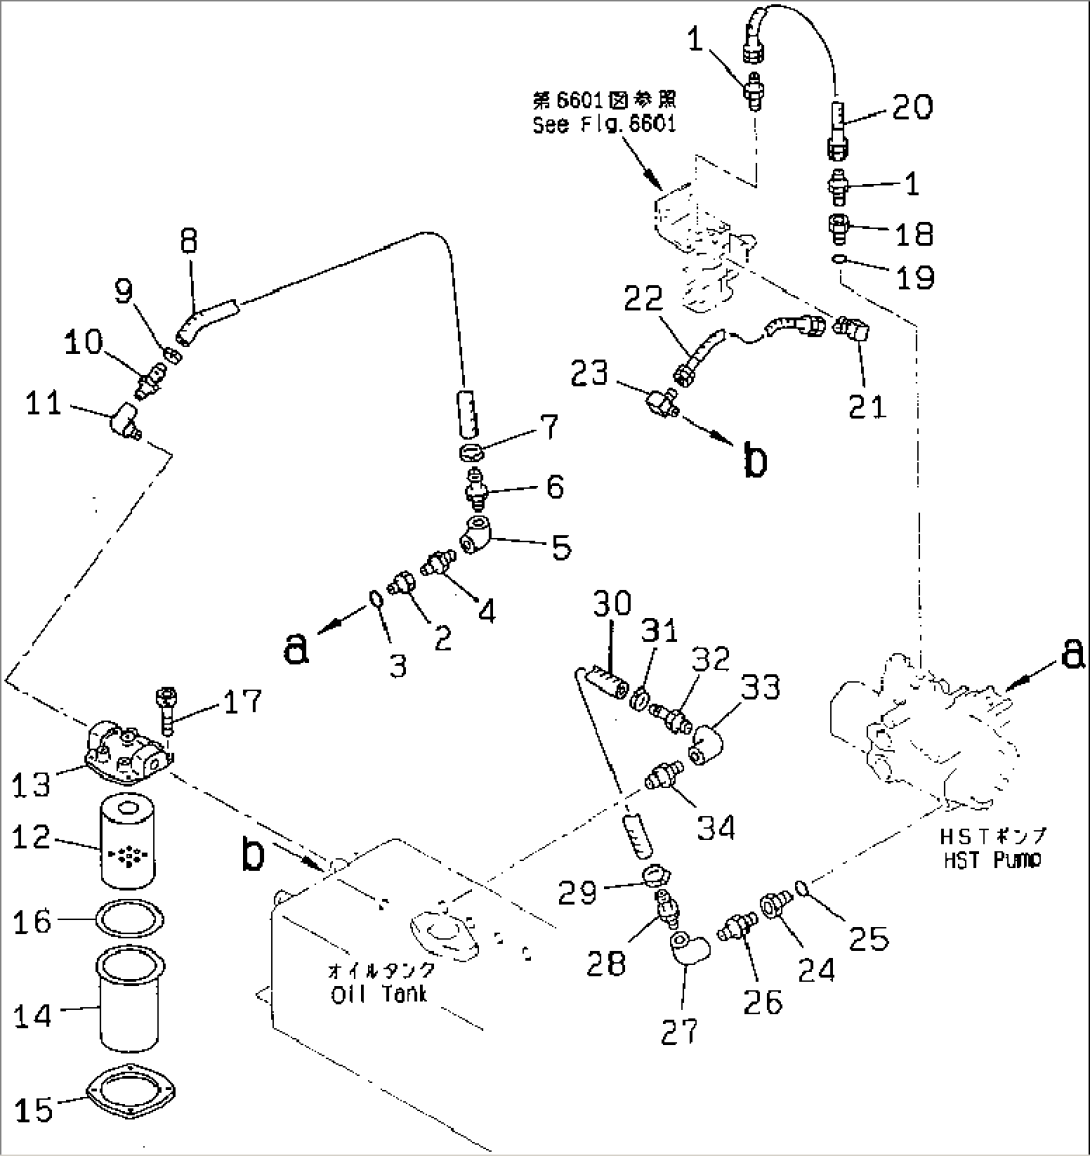 HYDRAULIC PIPING (TRAVEL MOTOR LINE) (2/2)(#2001-2100)